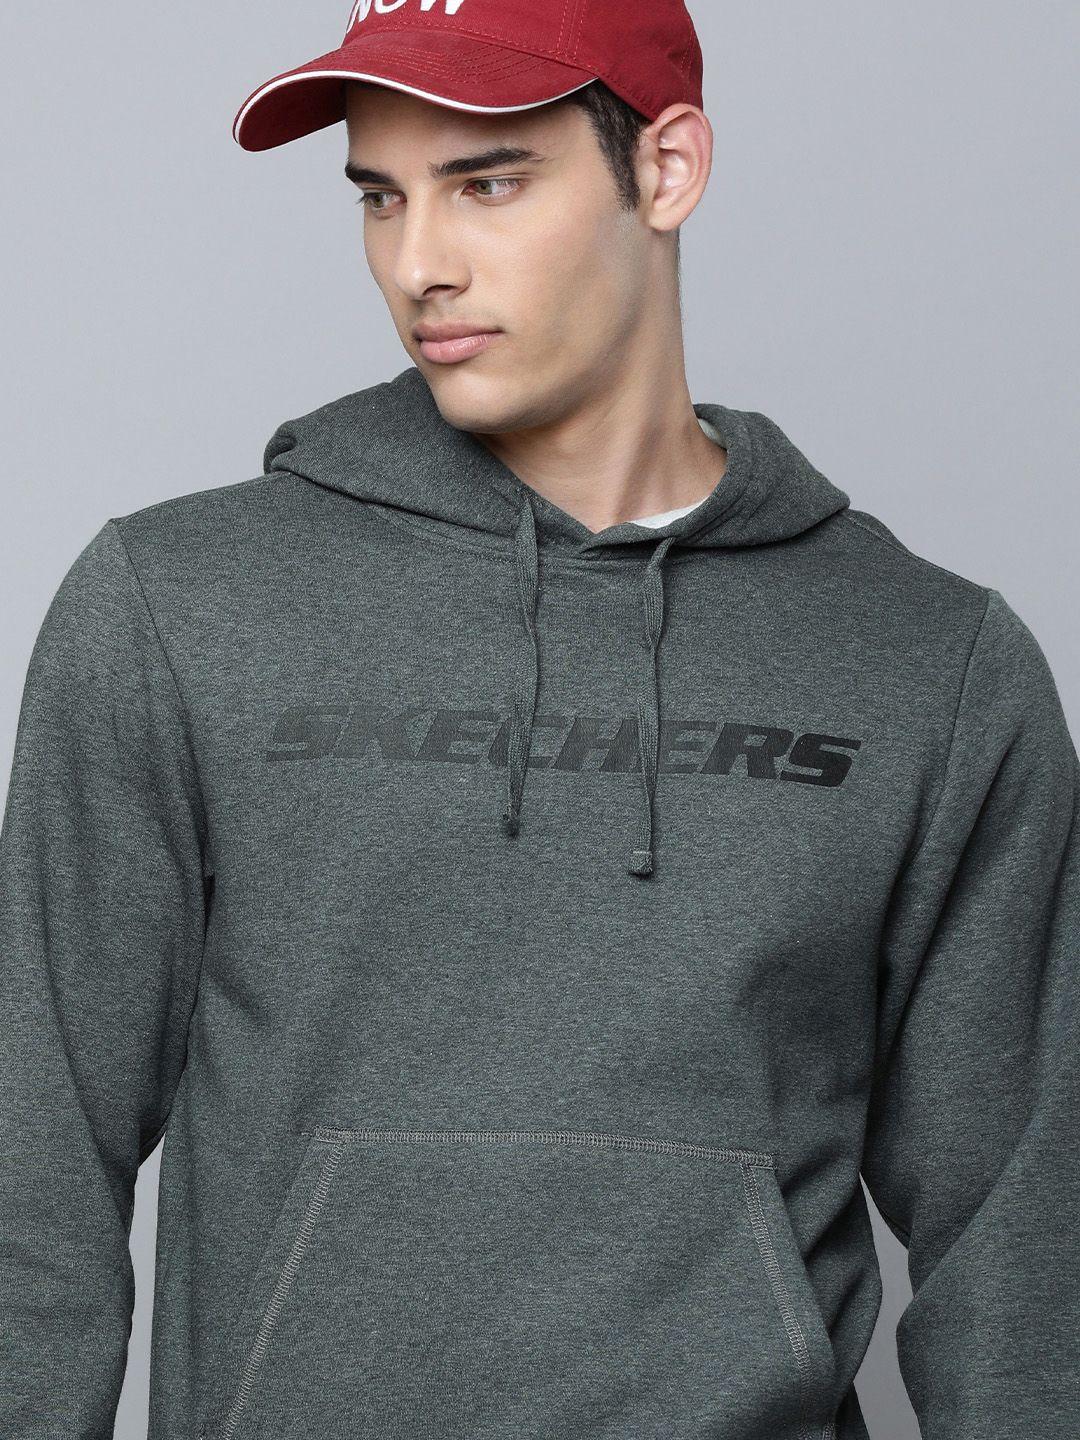 Skechers Men Charcoal Grey Melange Brand Logo Print Heritage II Pullover Hooded Sweatshirt